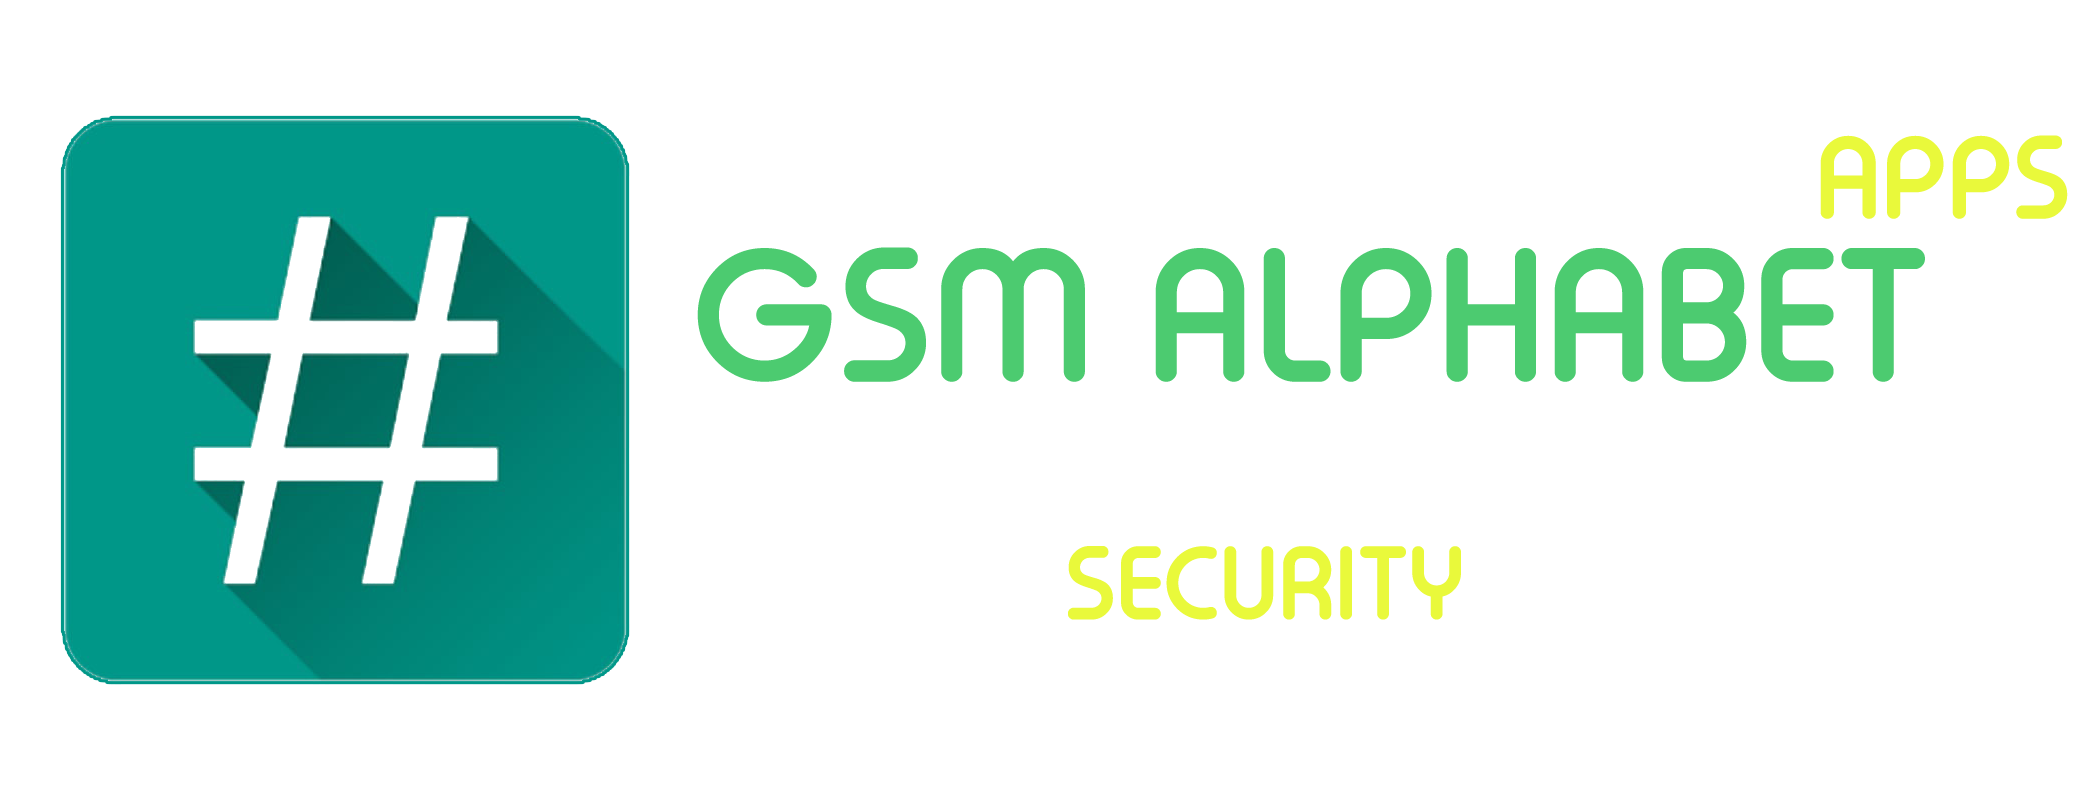 Gsm alphabet apps